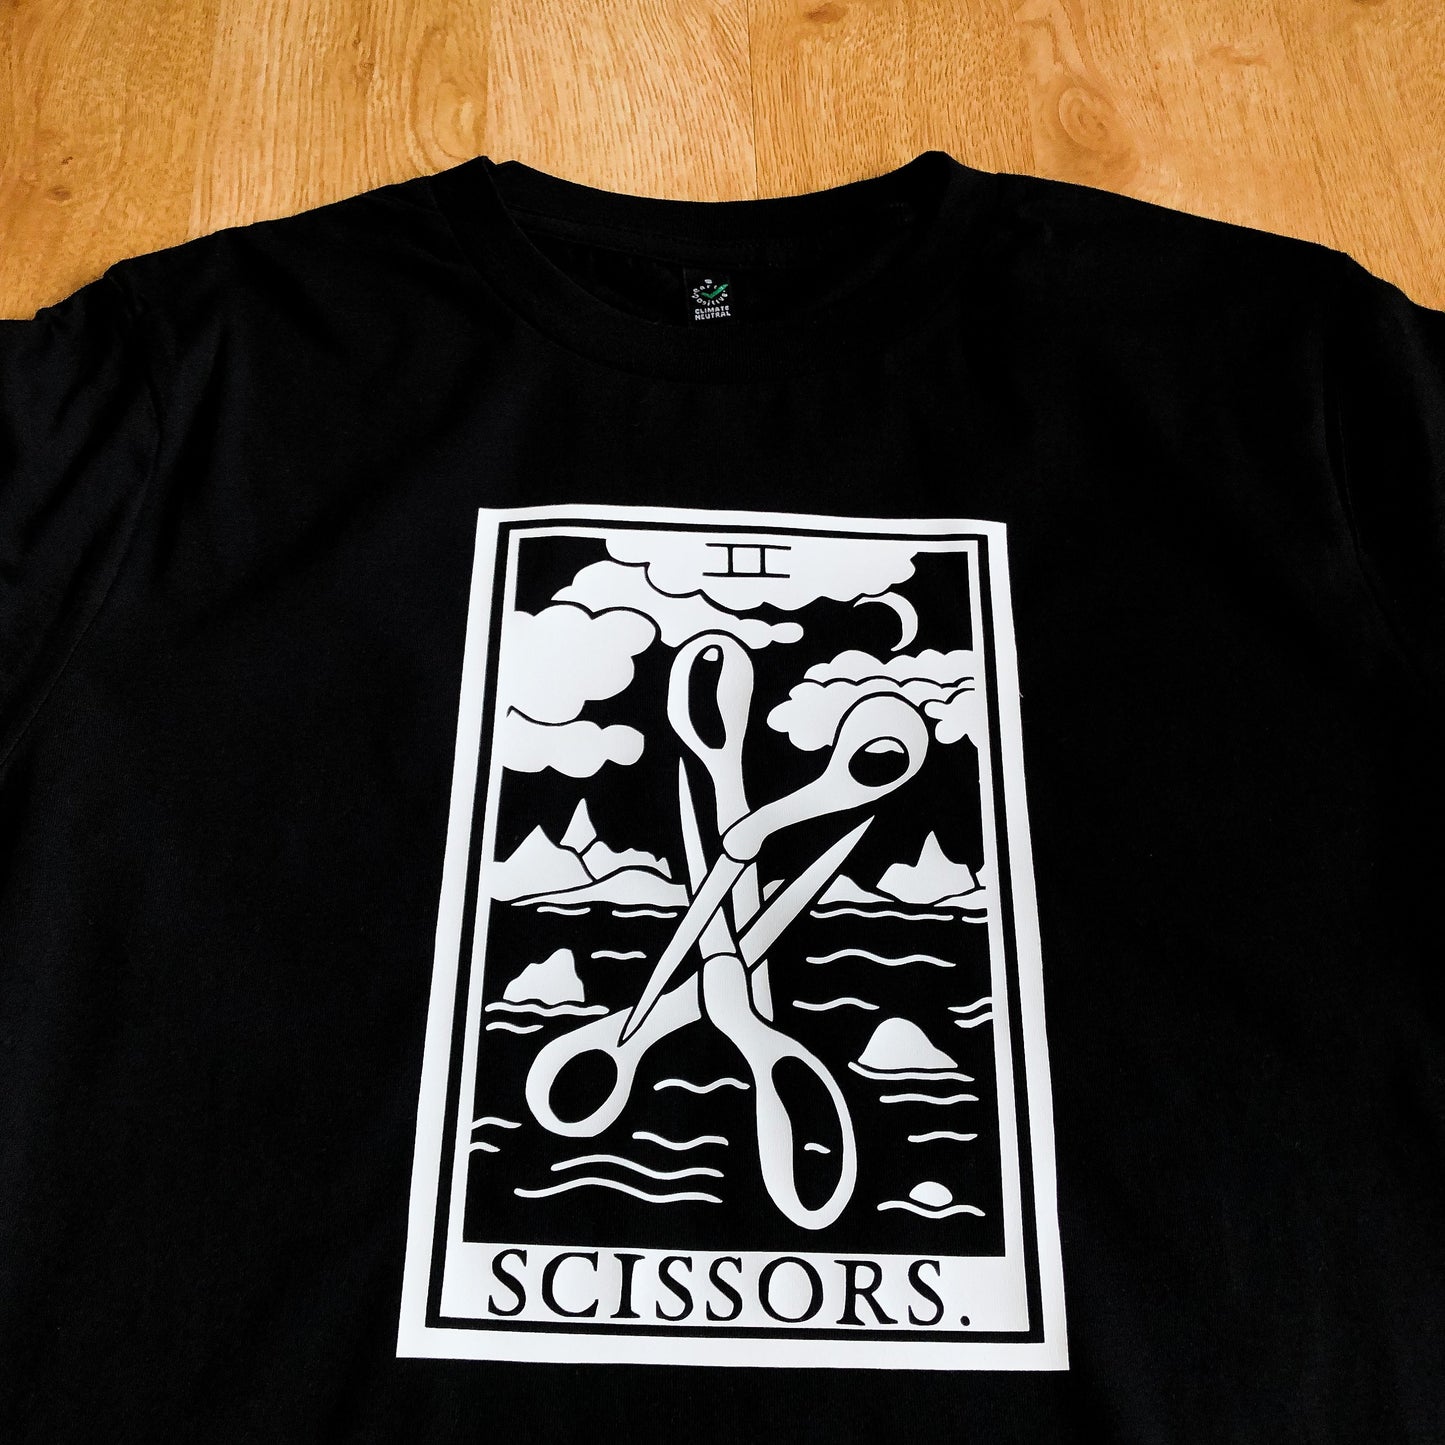 Scissor tarot card black t-shirt